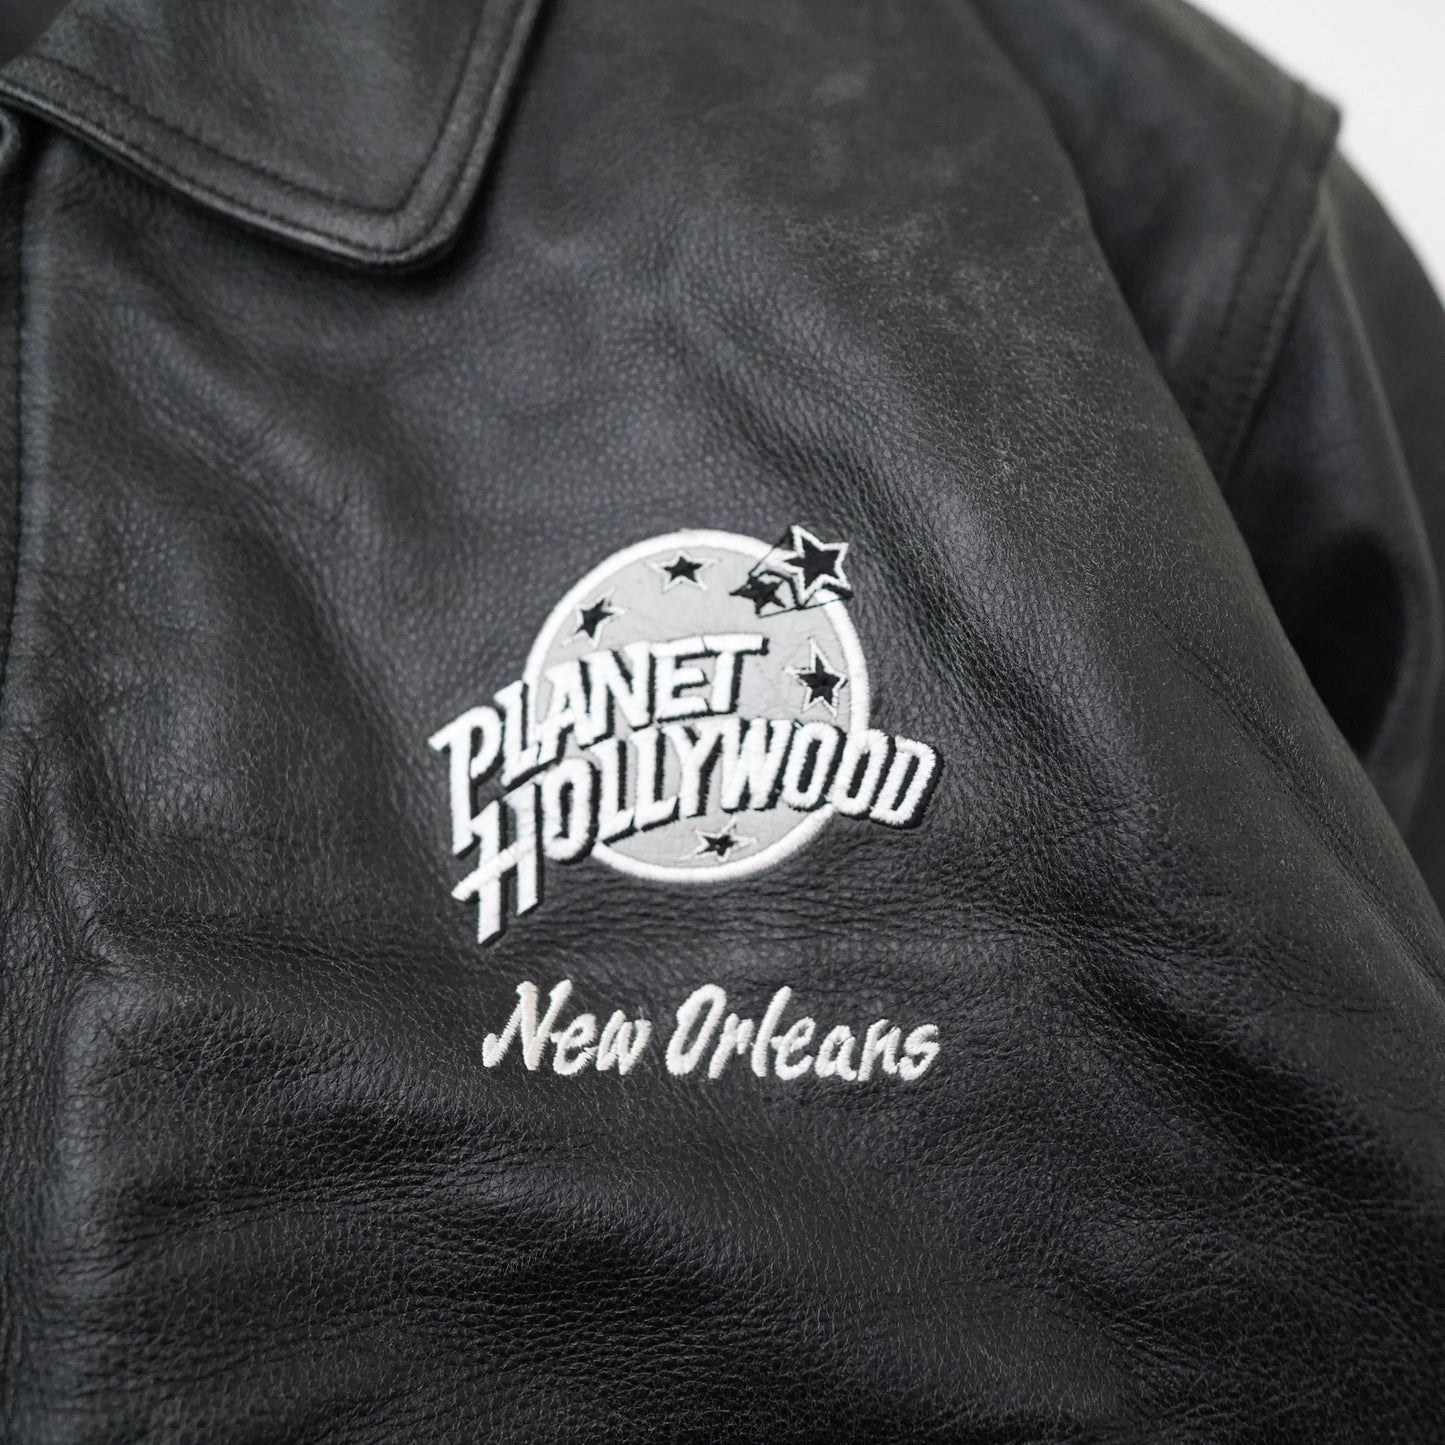 PLANET HOLLYWOOD leather jacket